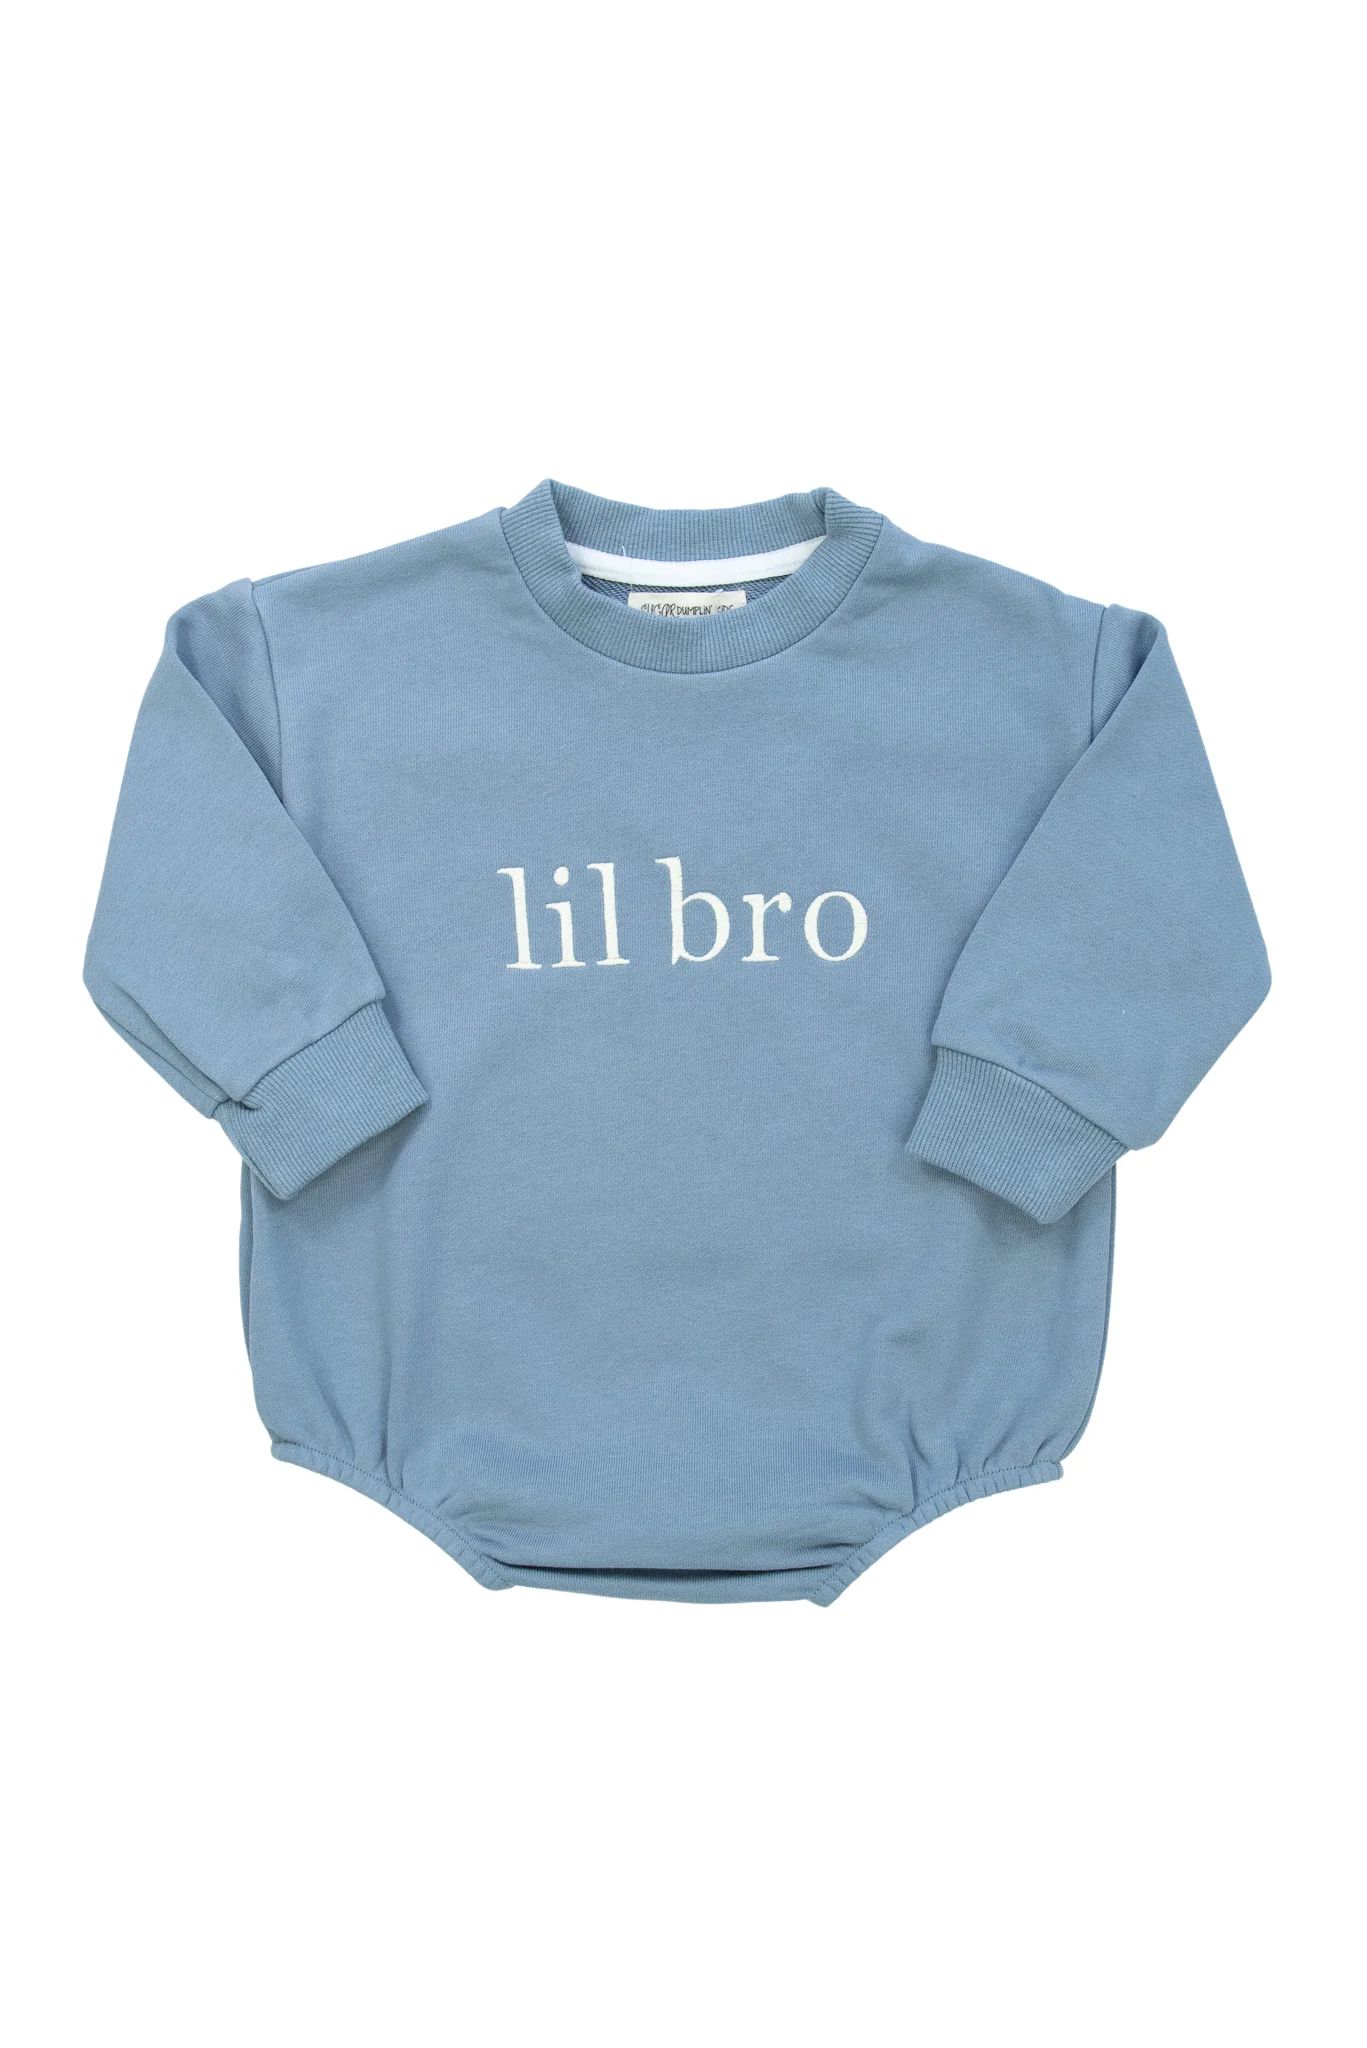 Boys Lil Bro Sweatshirt Bubble | Sugar Dumplin' Kids